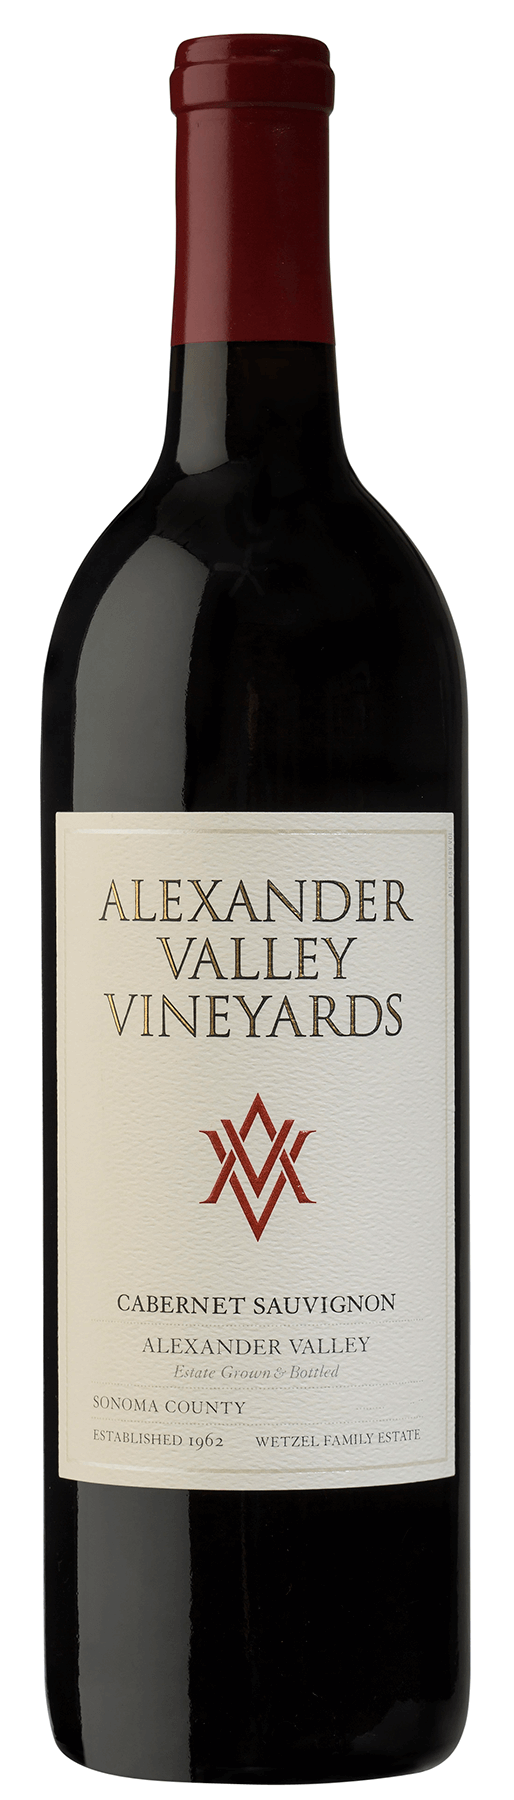 Alexander Valley Vineyards Cabernet Sauvignon 2014